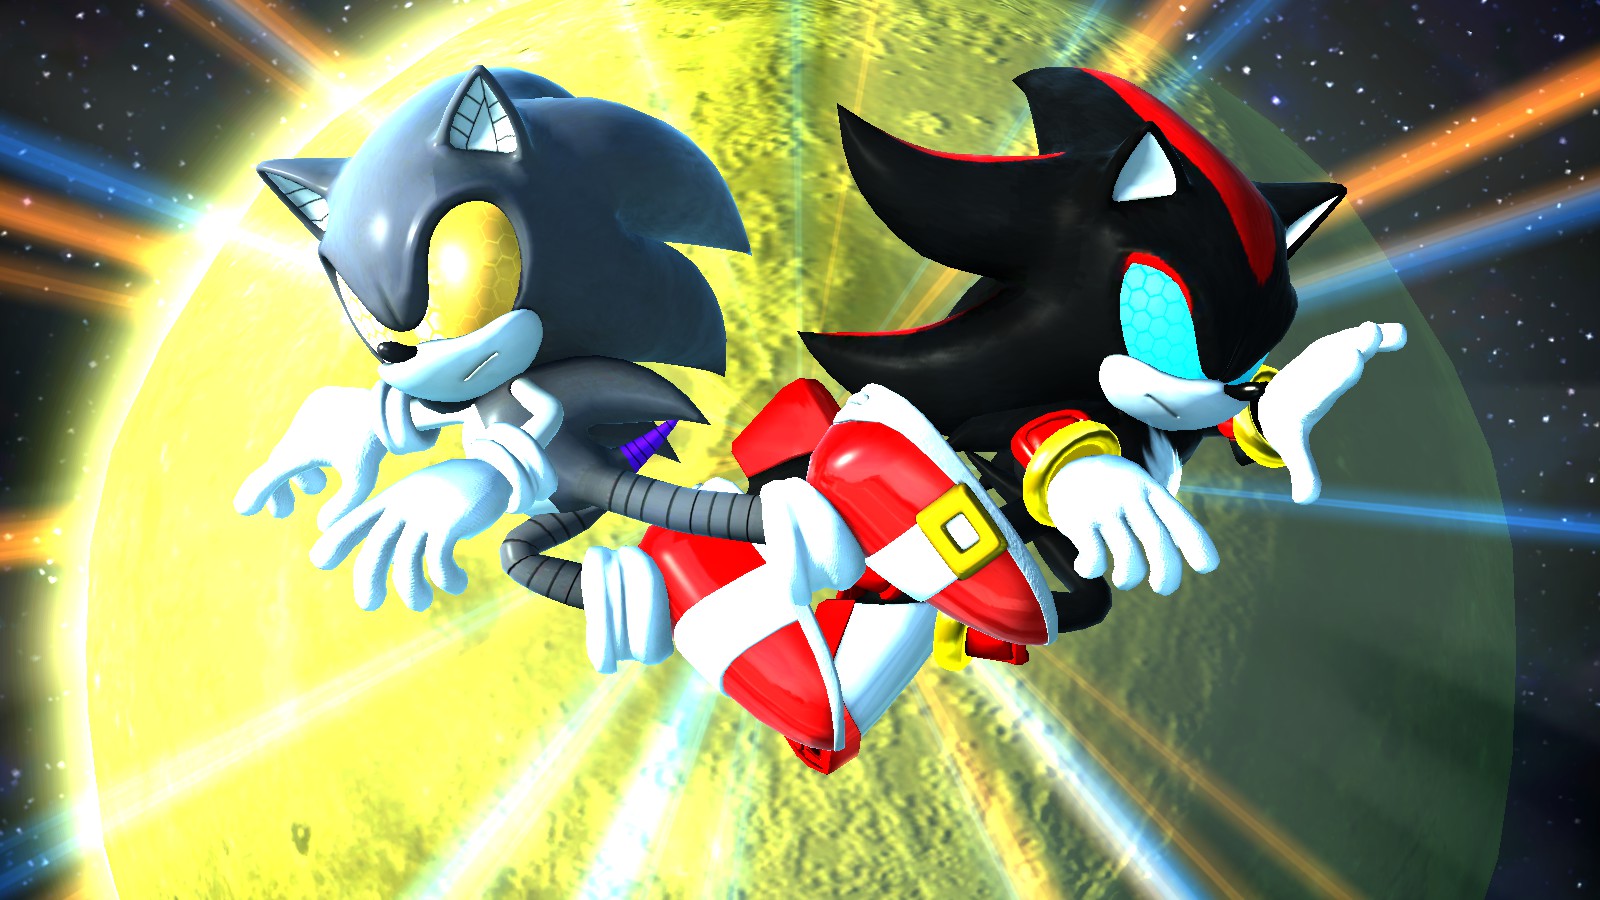 Sonic revenge. Knuckles Chaotix Metal Sonic. Метал Соник НАКЛЗ Хаотикс. Метал Соник Knuckles Chaotix. Sonic Mobius Evolution.